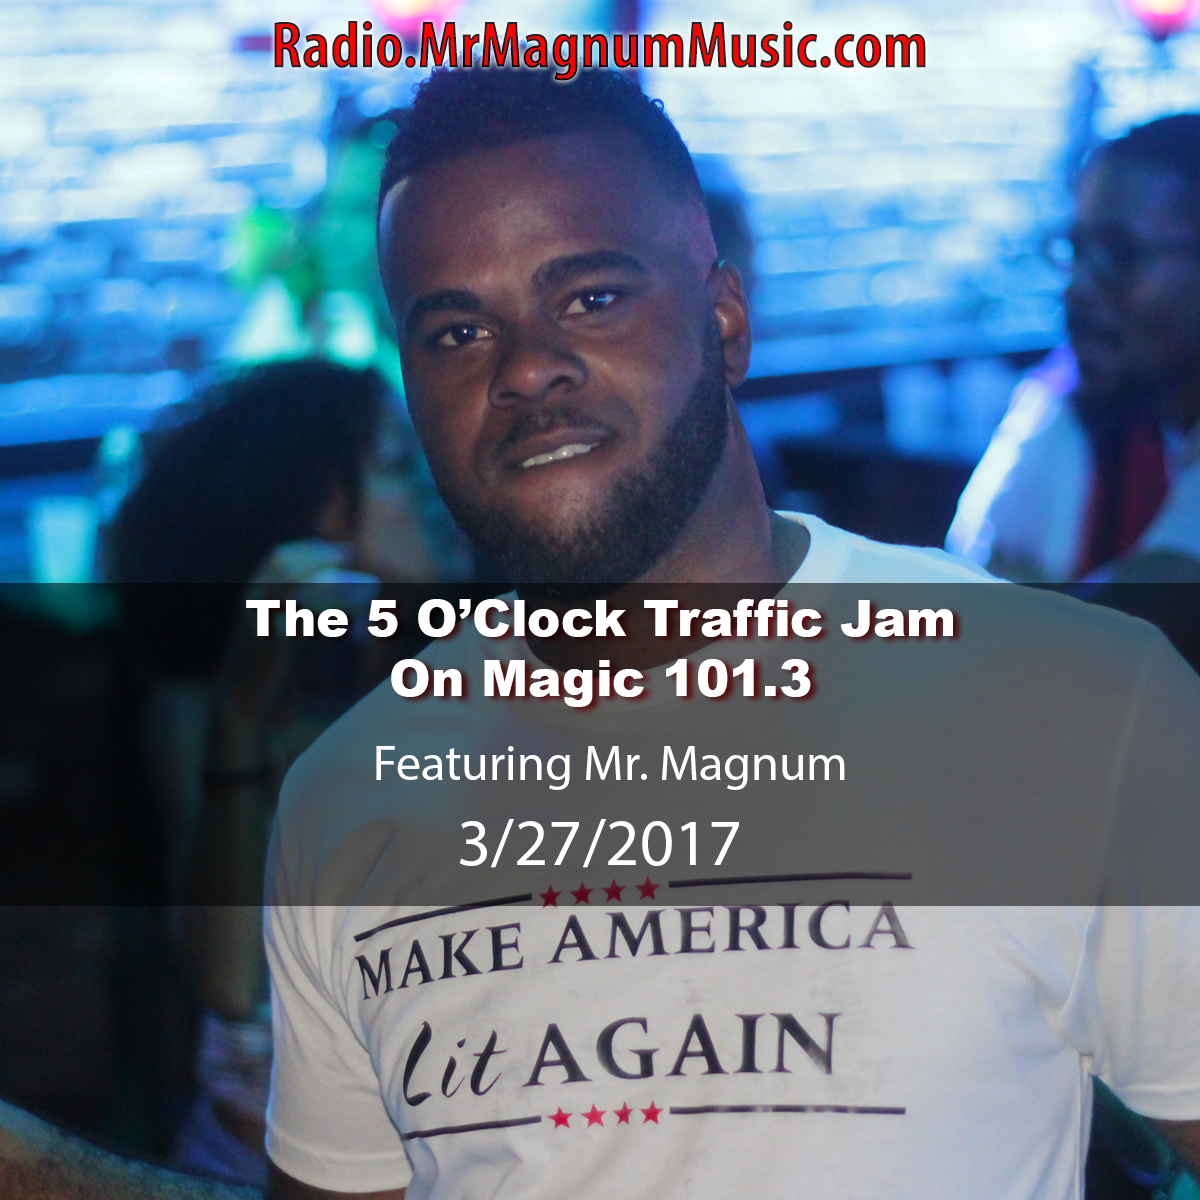 The 5 O'Clock Traffic Jam 20170327 featuring Gainesville's #1 DJ, Mr. Magnum on Magic 101.3